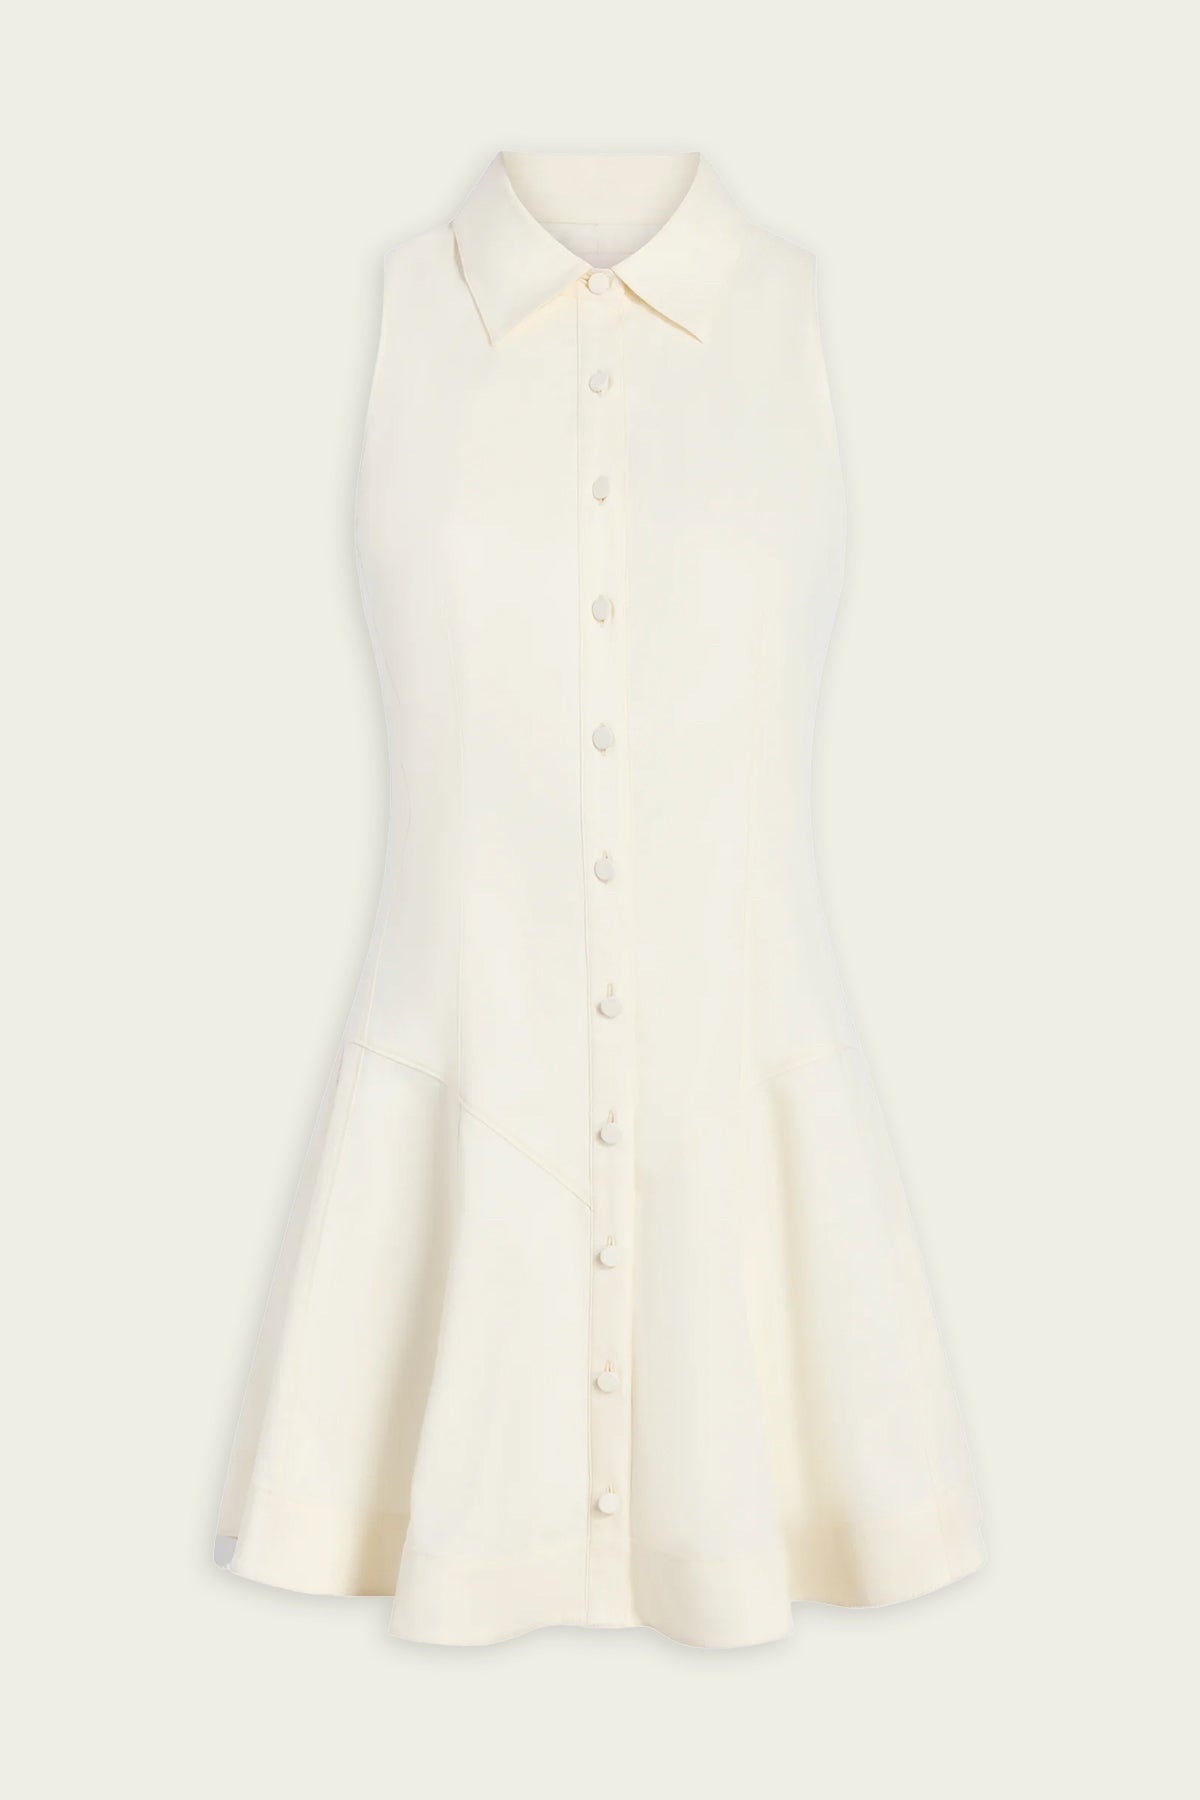 Poppy Dress in Ivory - shop-olivia.com